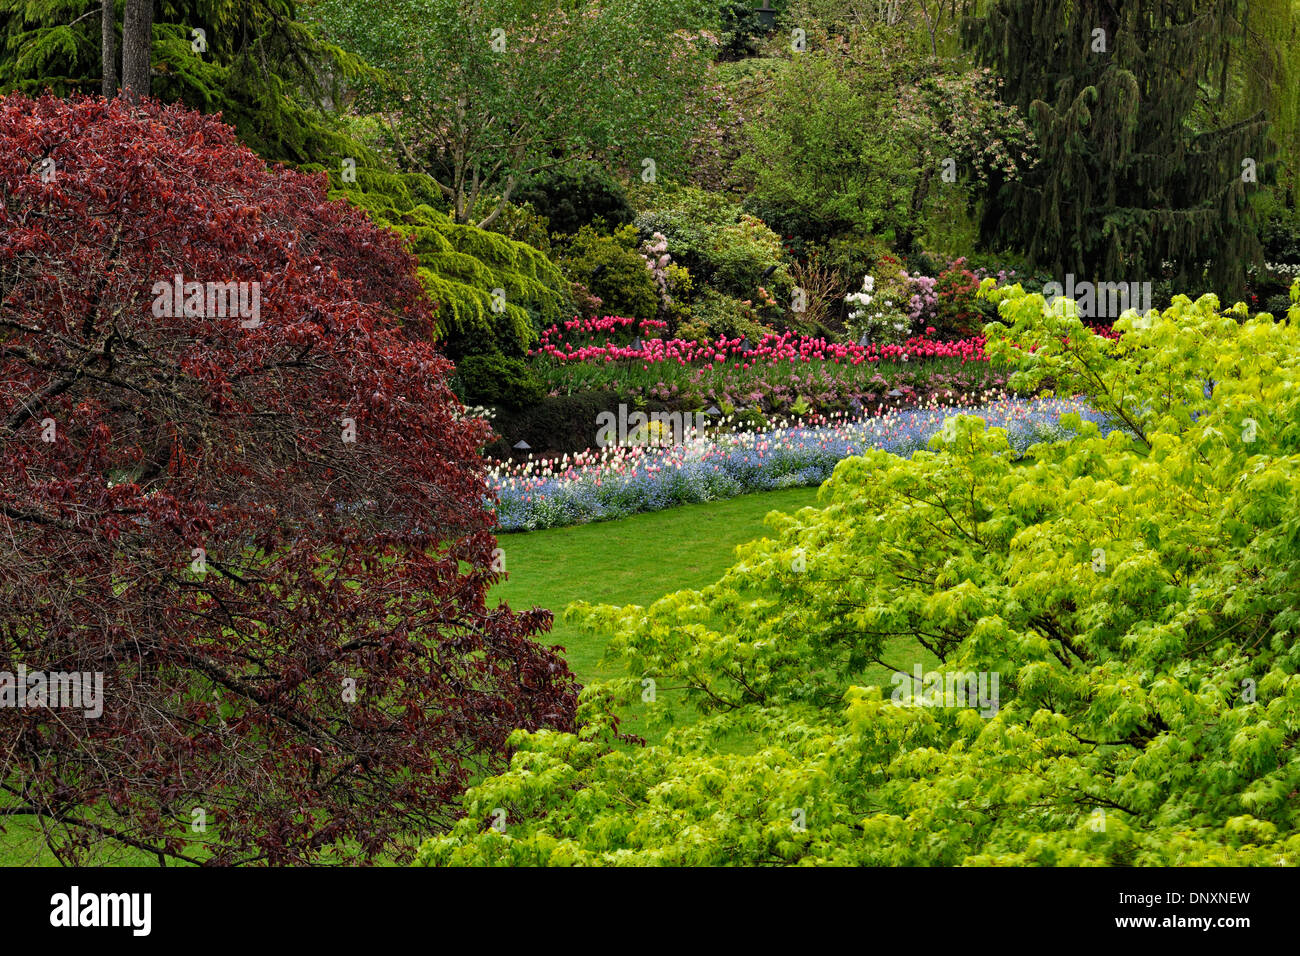 Les Butchart Gardens- fleurissement dans le jardin en contrebas, Victoria, BC, Canada Banque D'Images